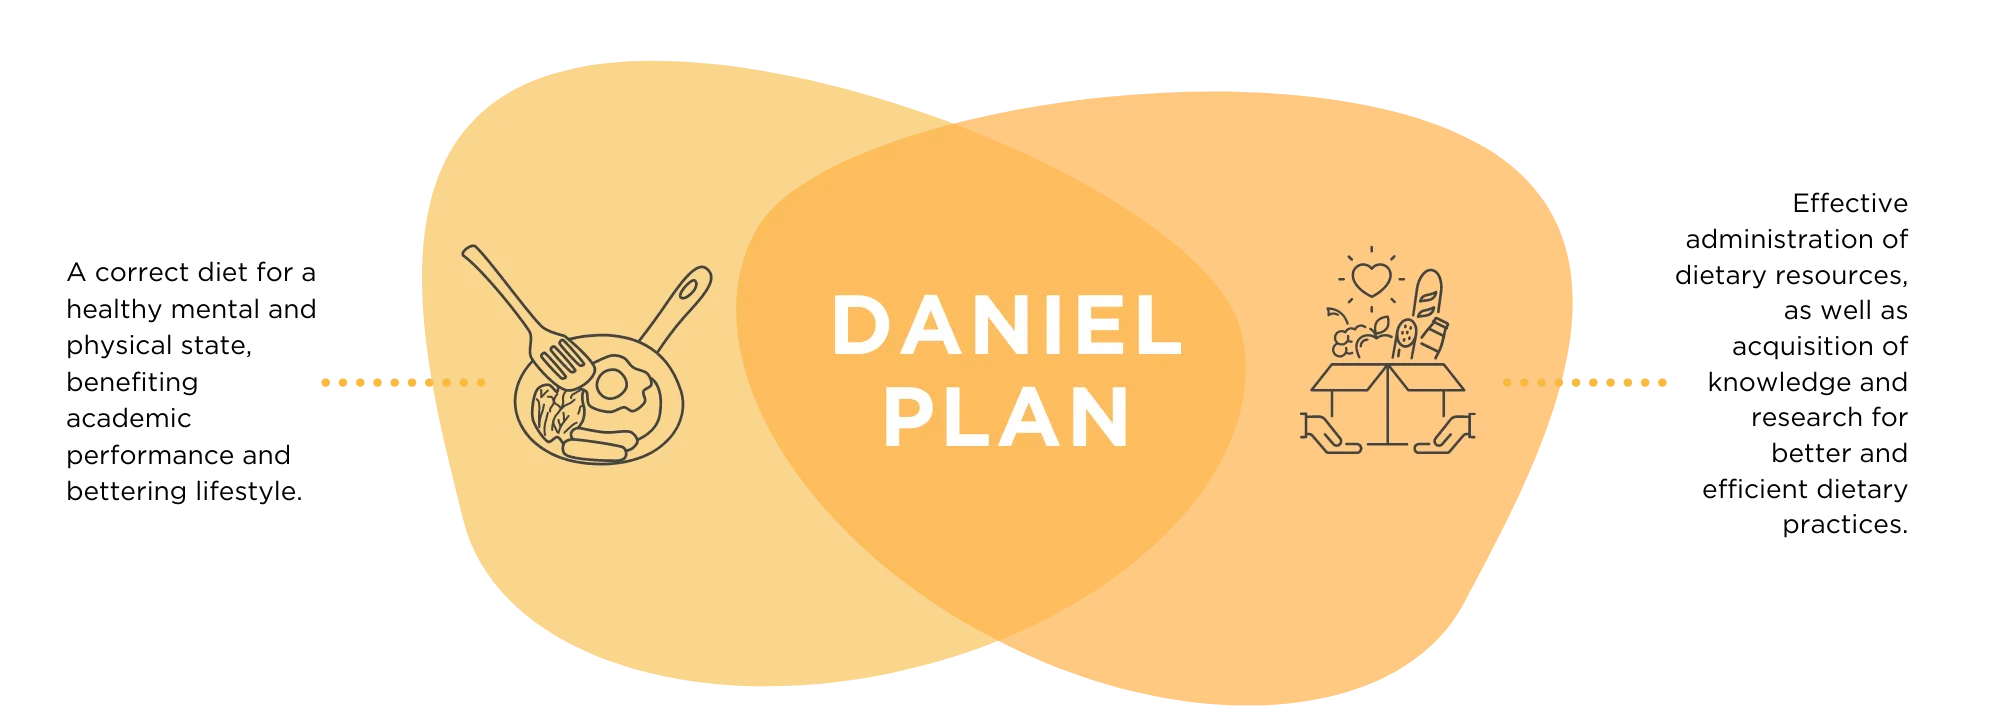 Plan Daniel